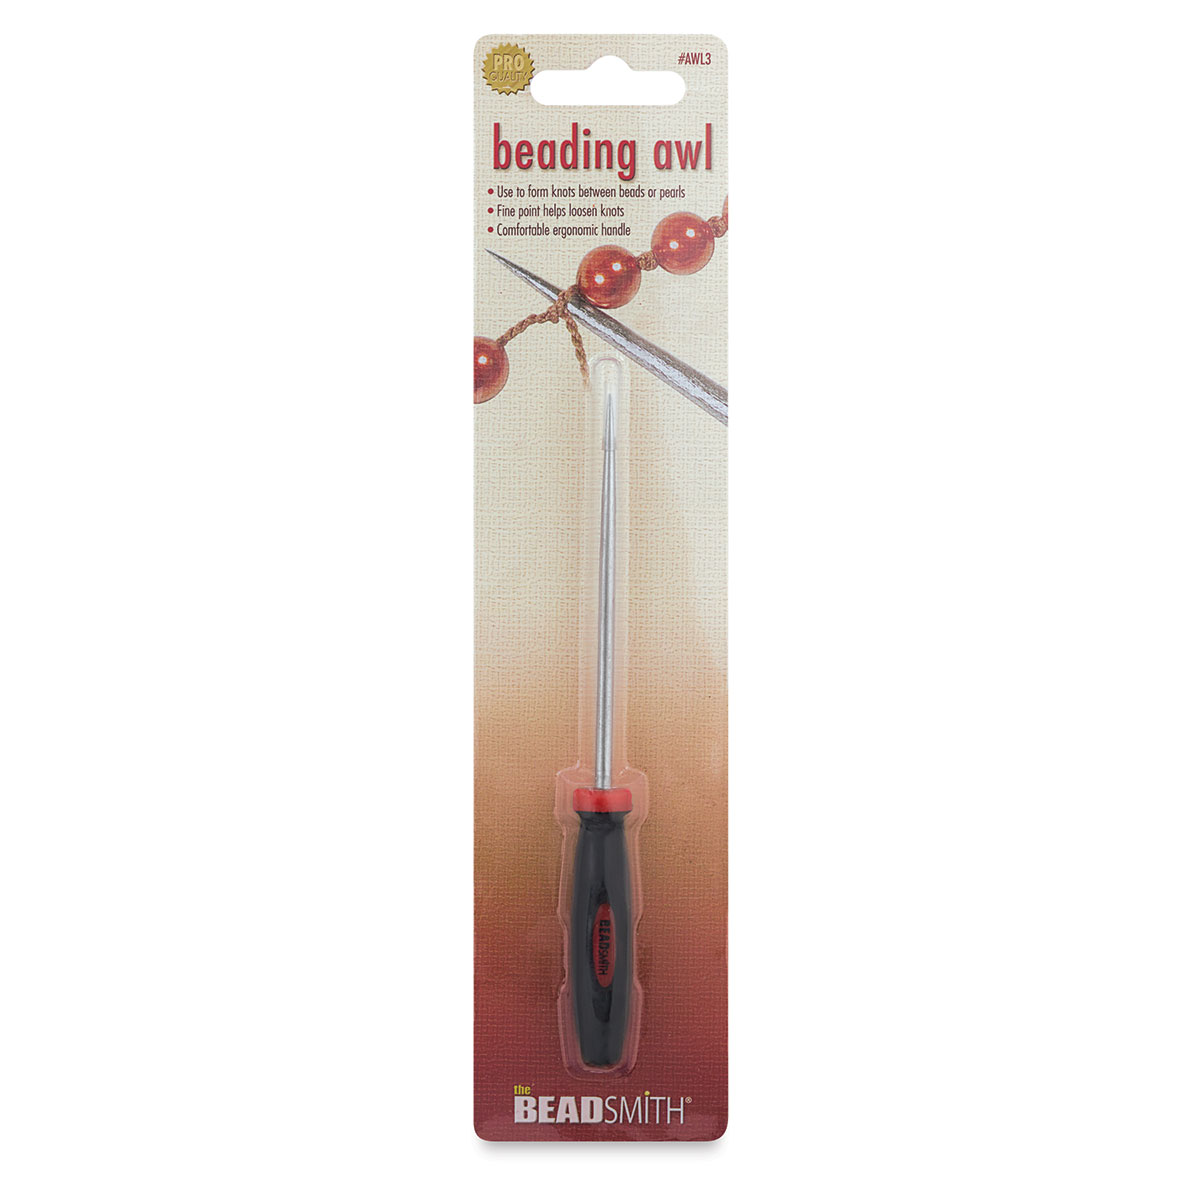 Beadsmith Beading Awl Bead Knotting Tool | Esslinger